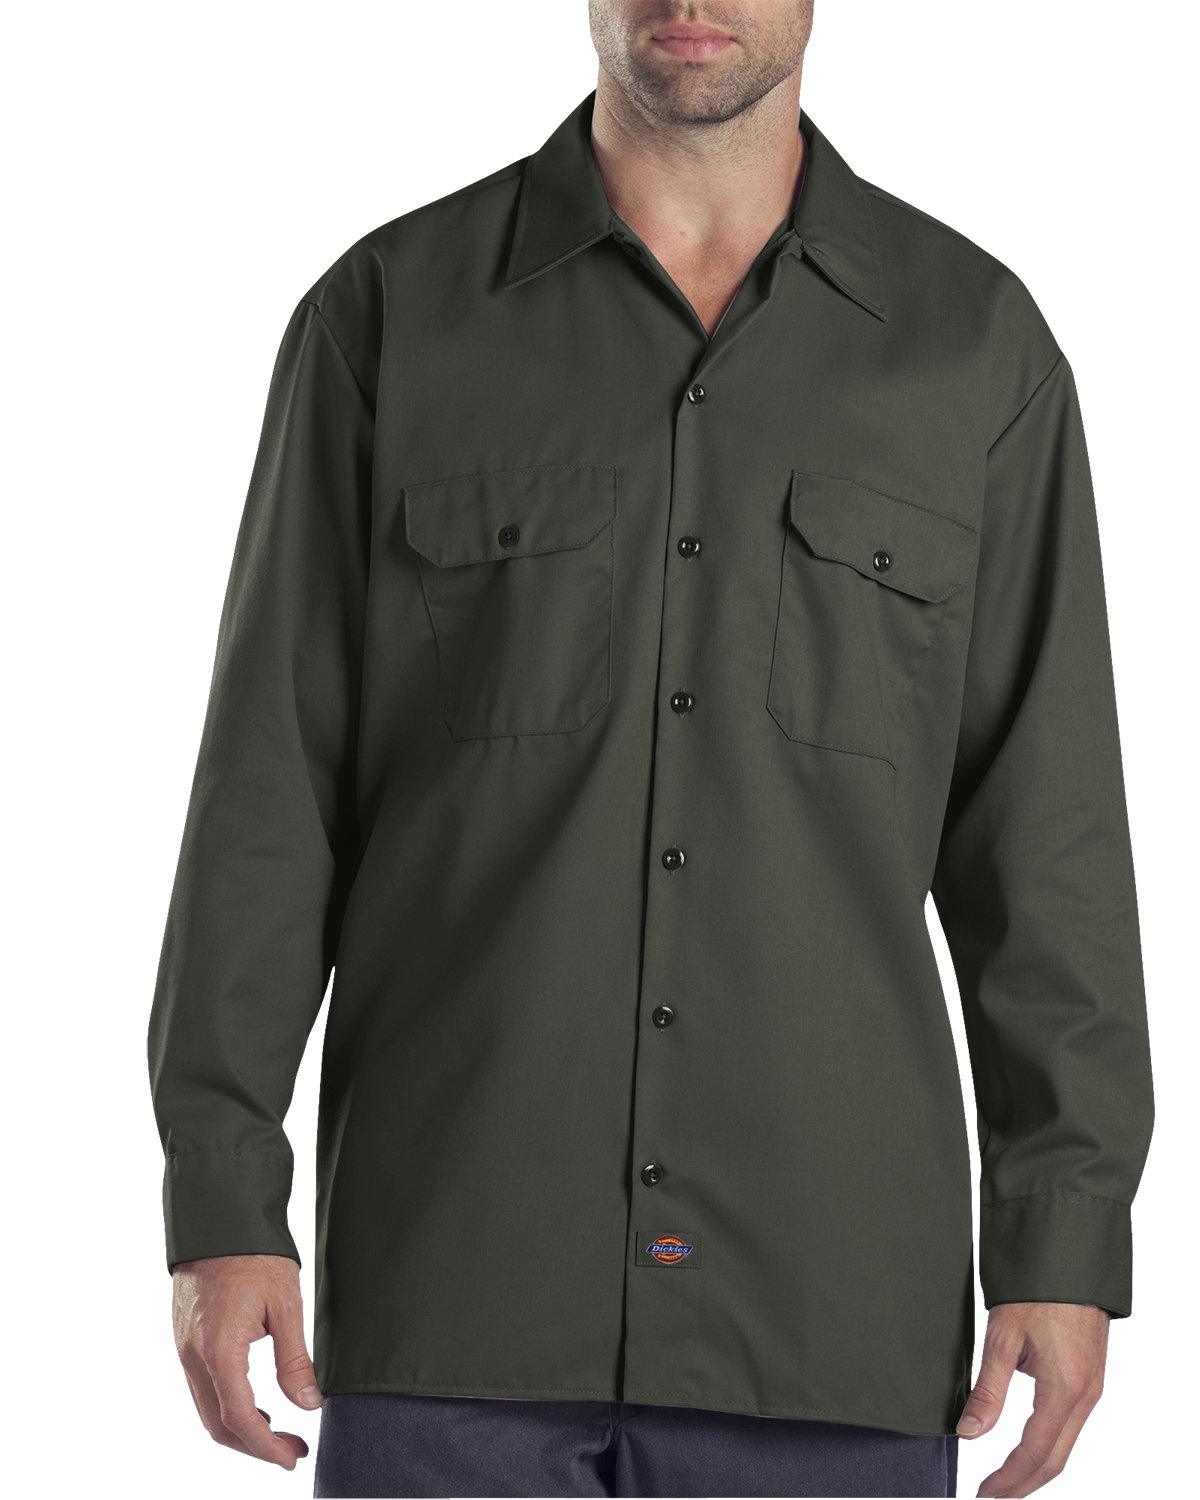 Dickies Unisex Long-Sleeve Work Shirt OLIVE GREEN 